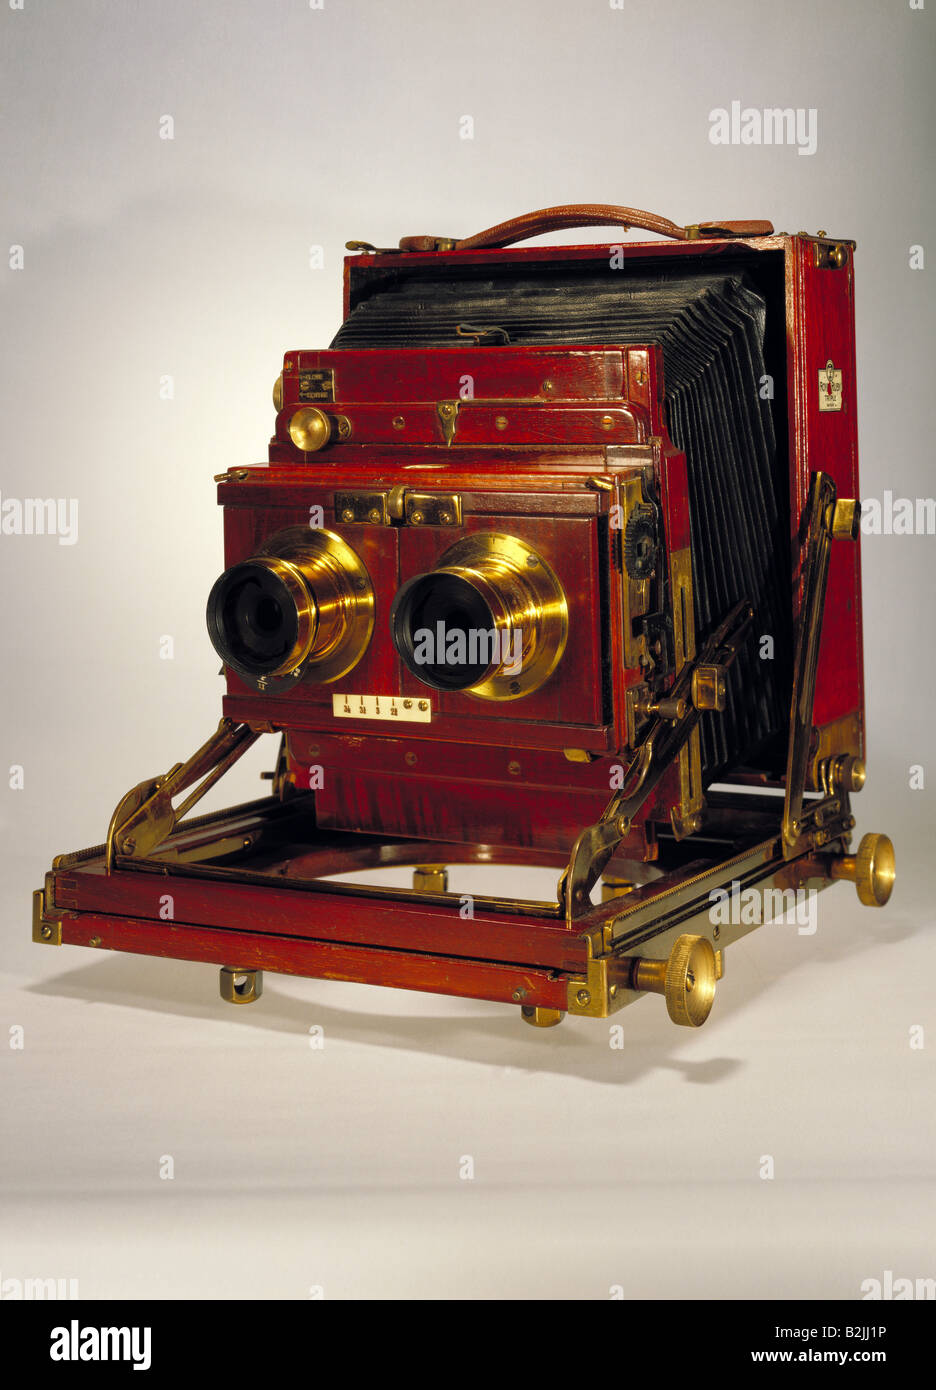 Fotografie, Kameras, England, Stereo-Reisekamera "Royal Ruby Triple", von Thornton Pickard, Höhe 25 cm, ca. 1900, Lehmann-Kollektion, Esens, Deutschland, Stockfoto